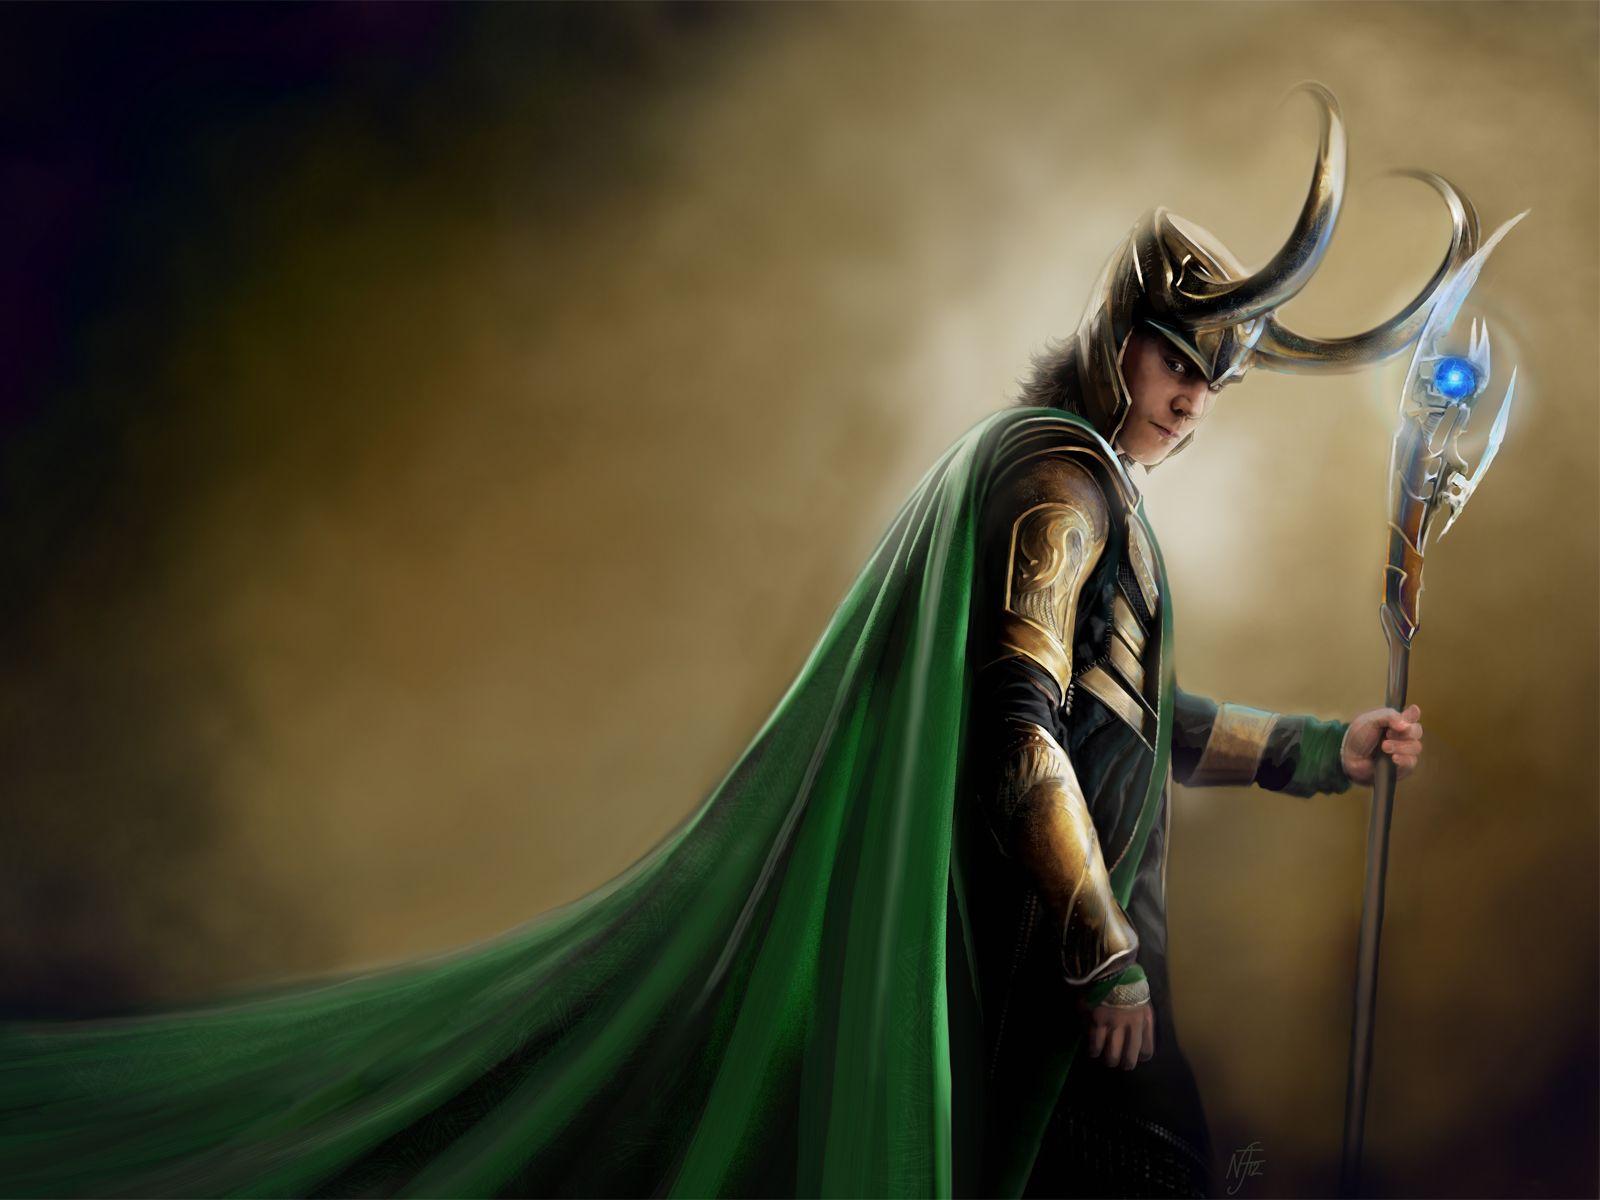 Marvel Loki Wallpapers Top Free Marvel Loki Backgrounds Wallpaperaccess ...